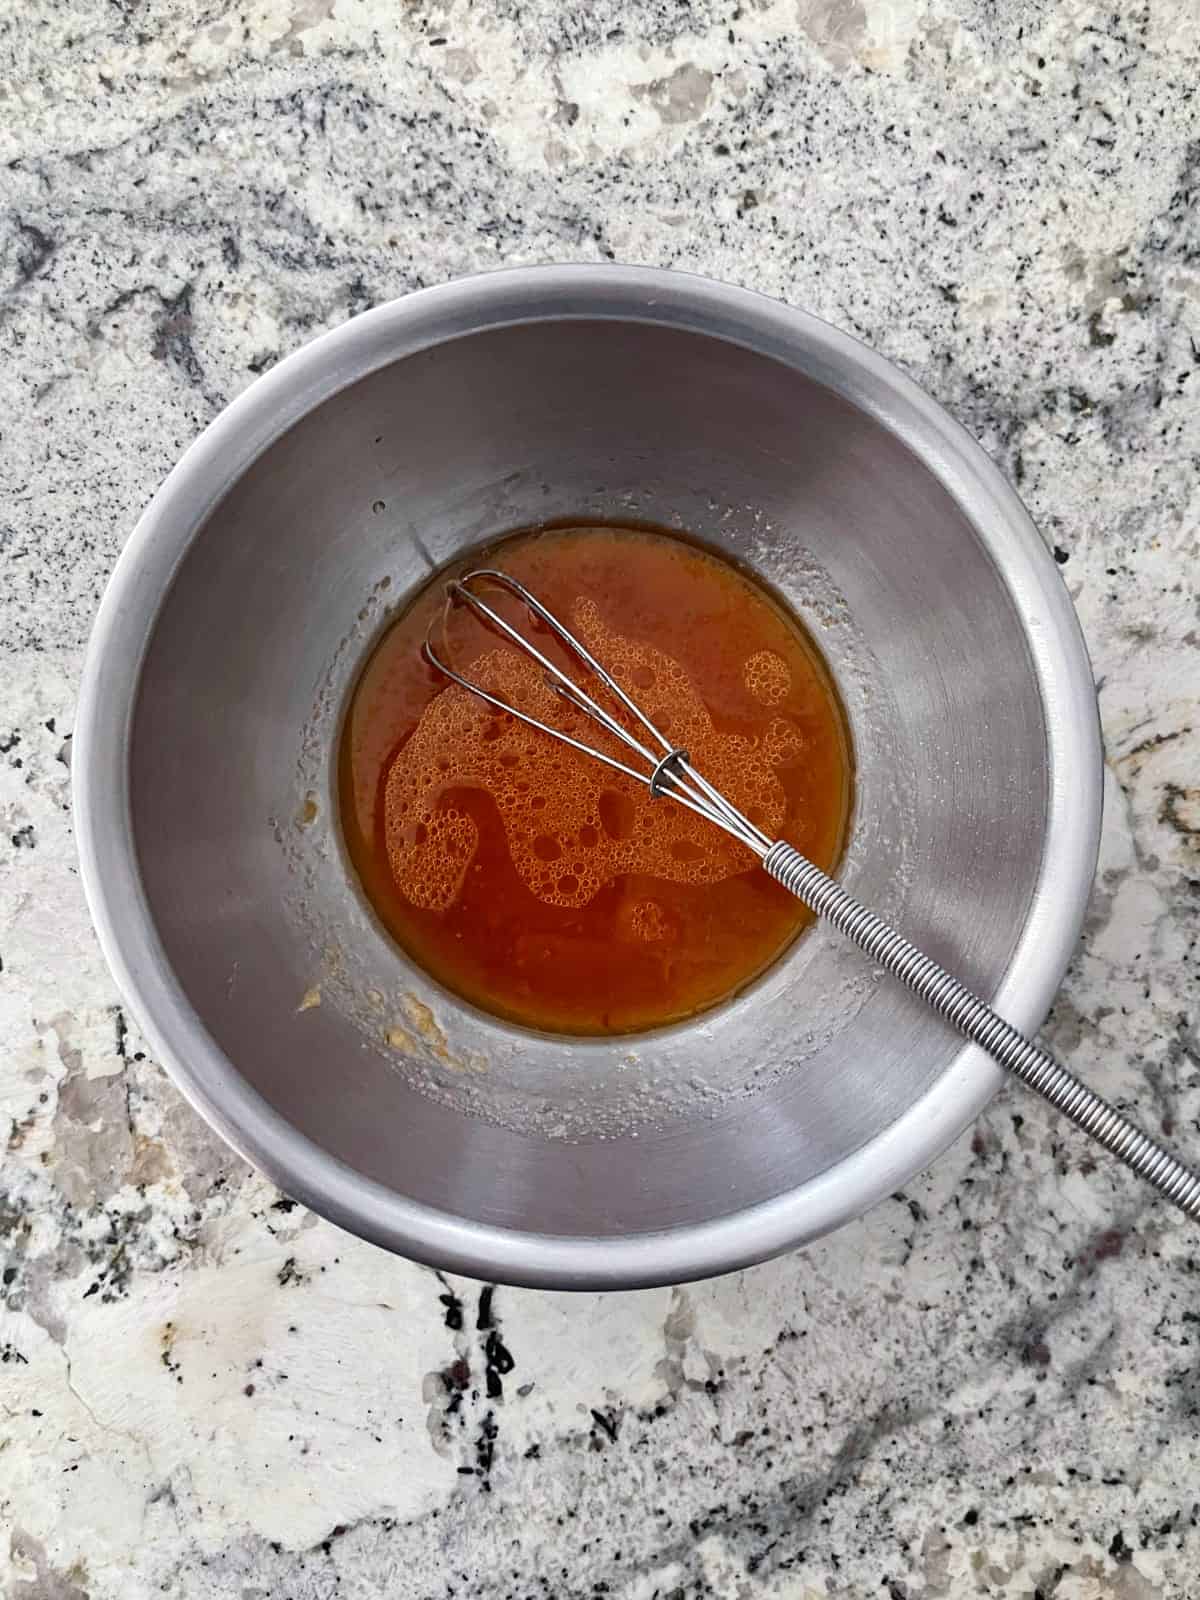 Whisking rice vinegar, Sambal oelek, sesame oil and garlic in stainless mixing bowl on granite counter.